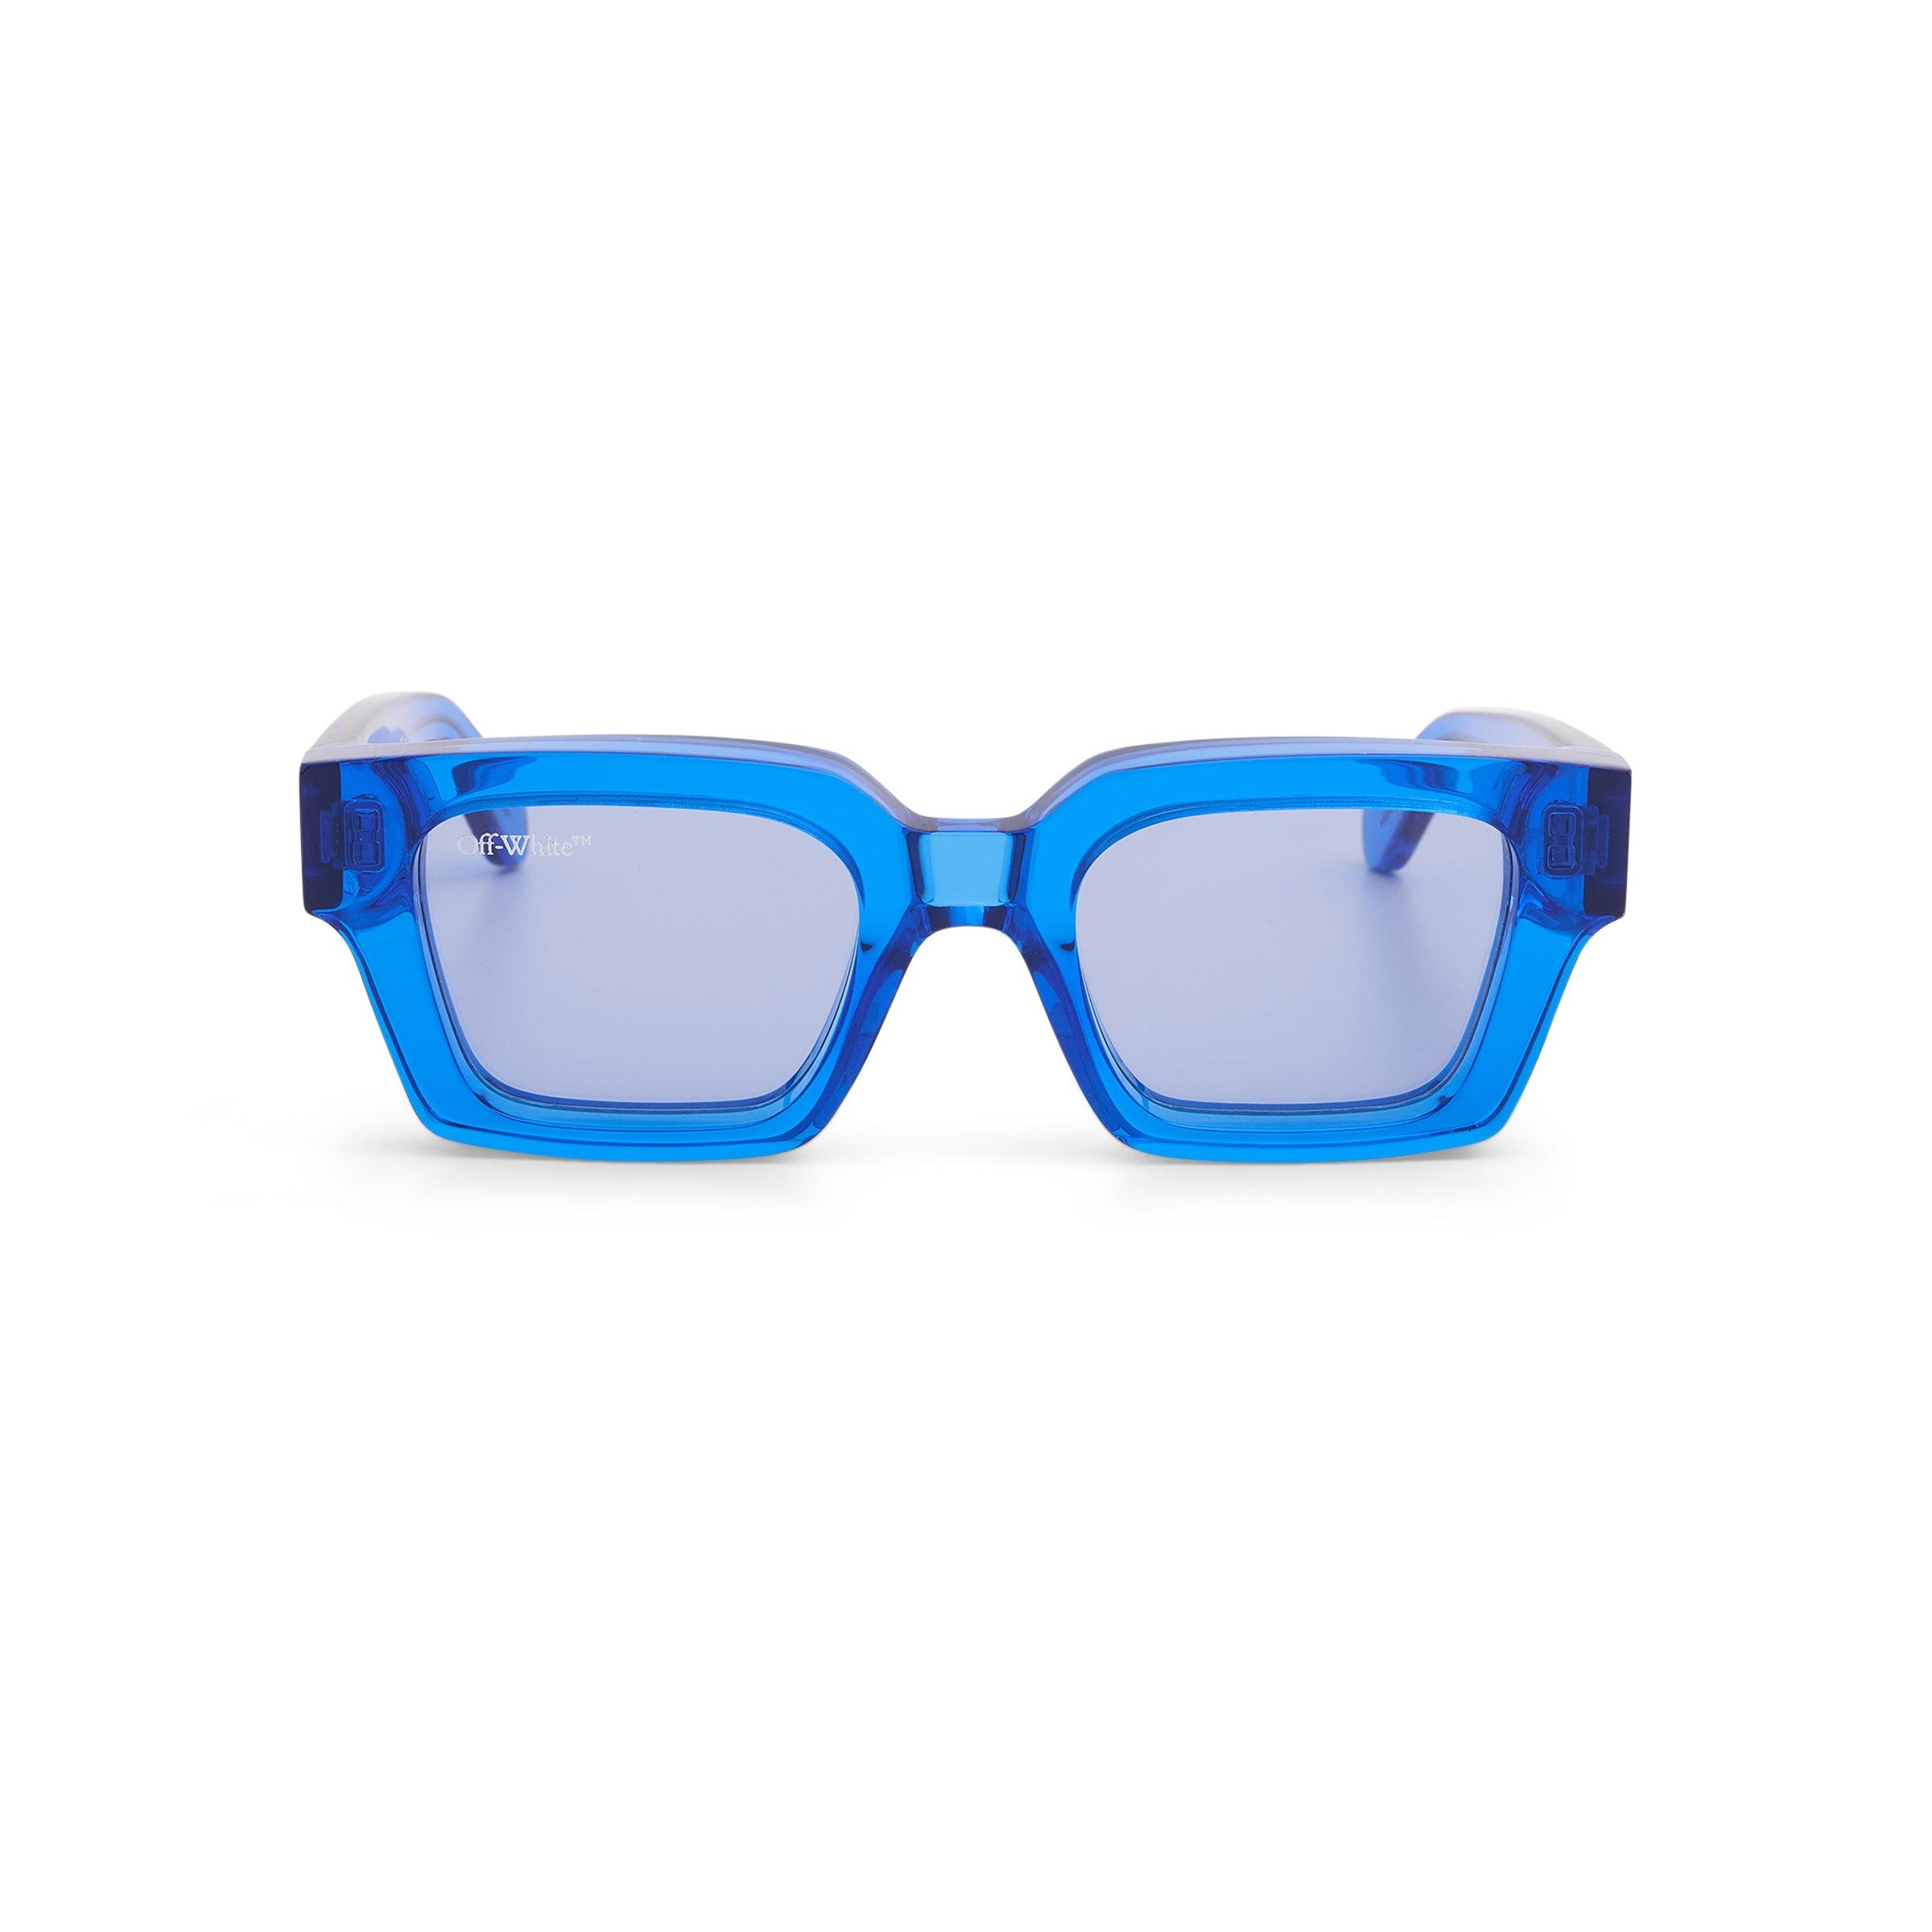 Off-White c/o Virgil Abloh Virgil Sunglasses In Crystal/blue | Lyst